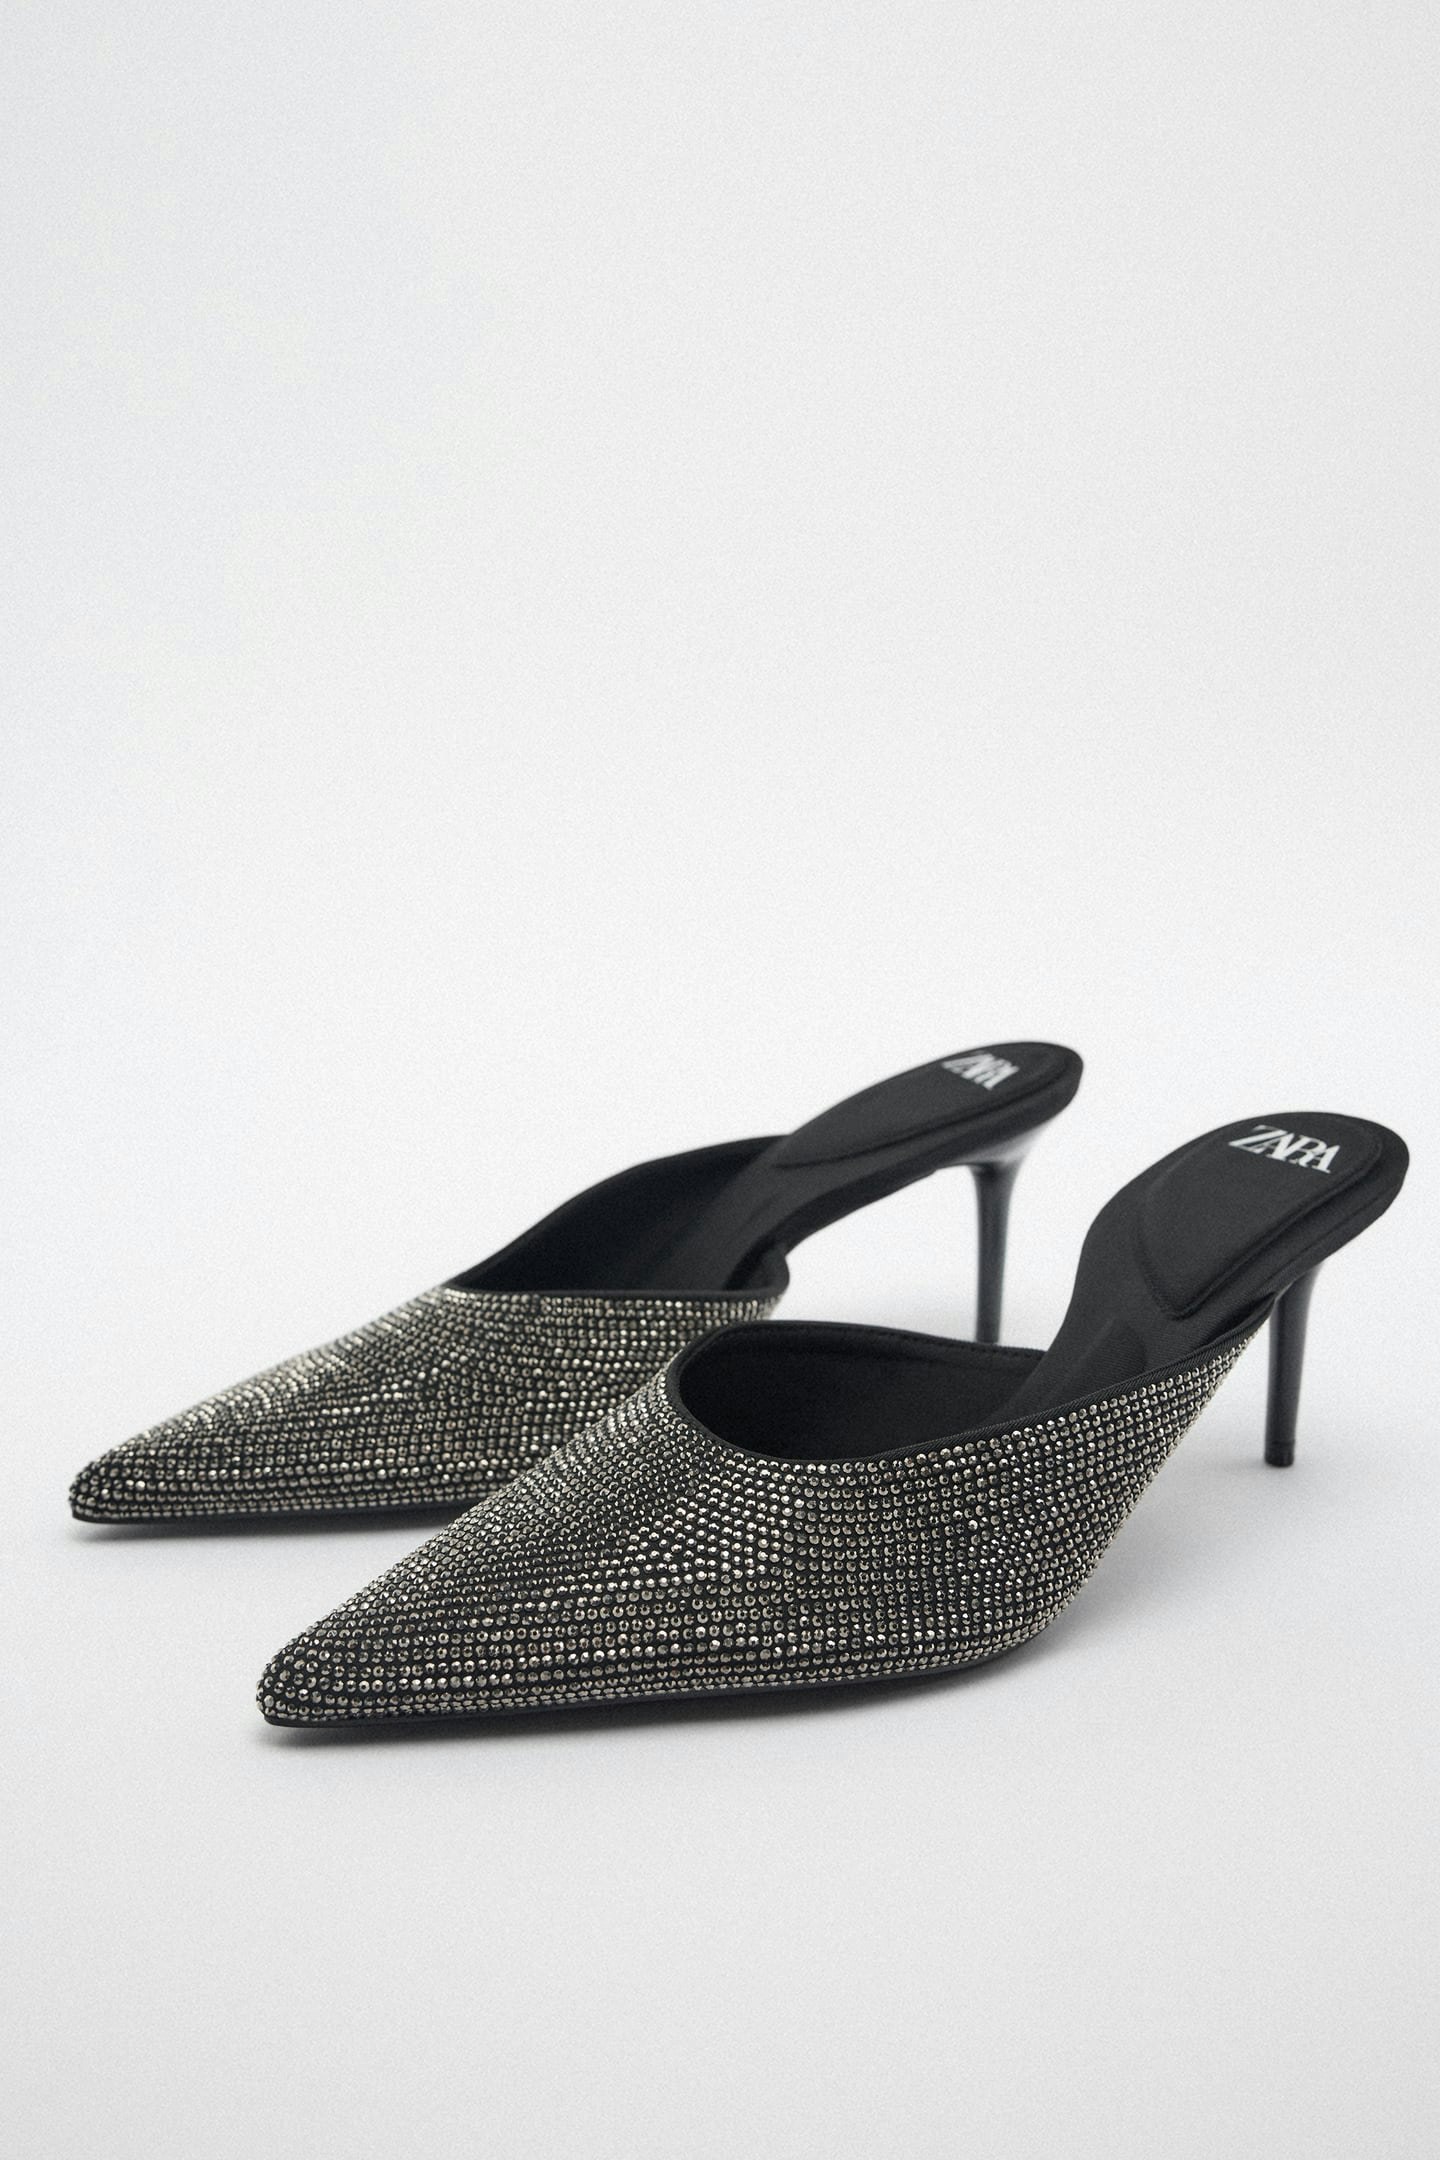 Zara, Heeled Shoes With Rhinestones